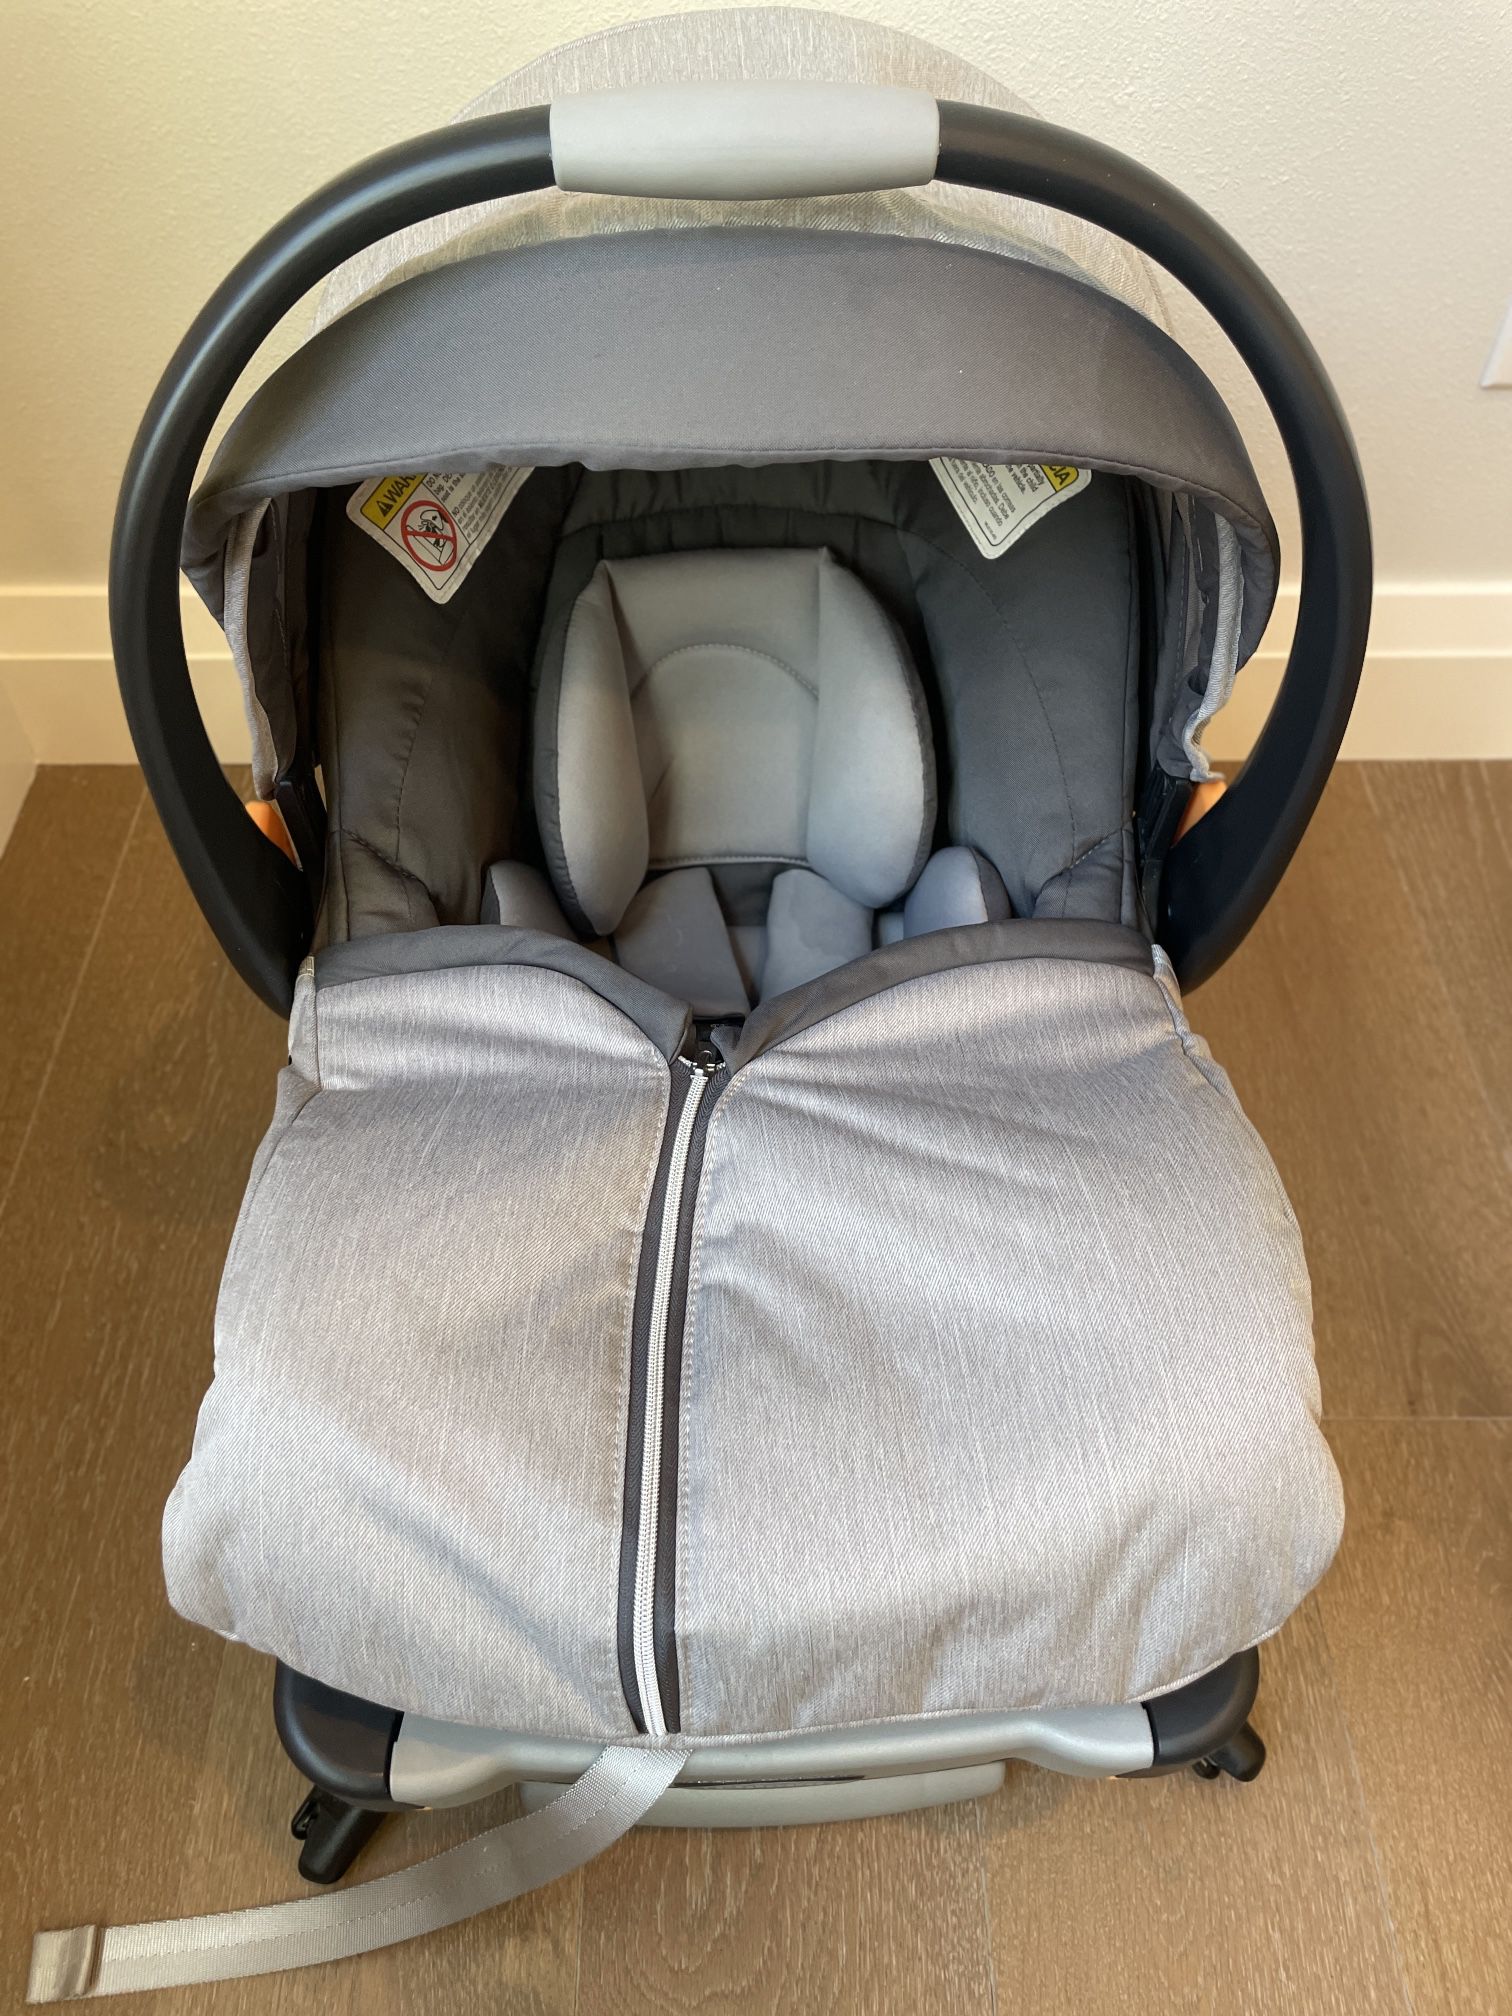 KeyFit 30 Infant Car Seat Plus A GIFT! 